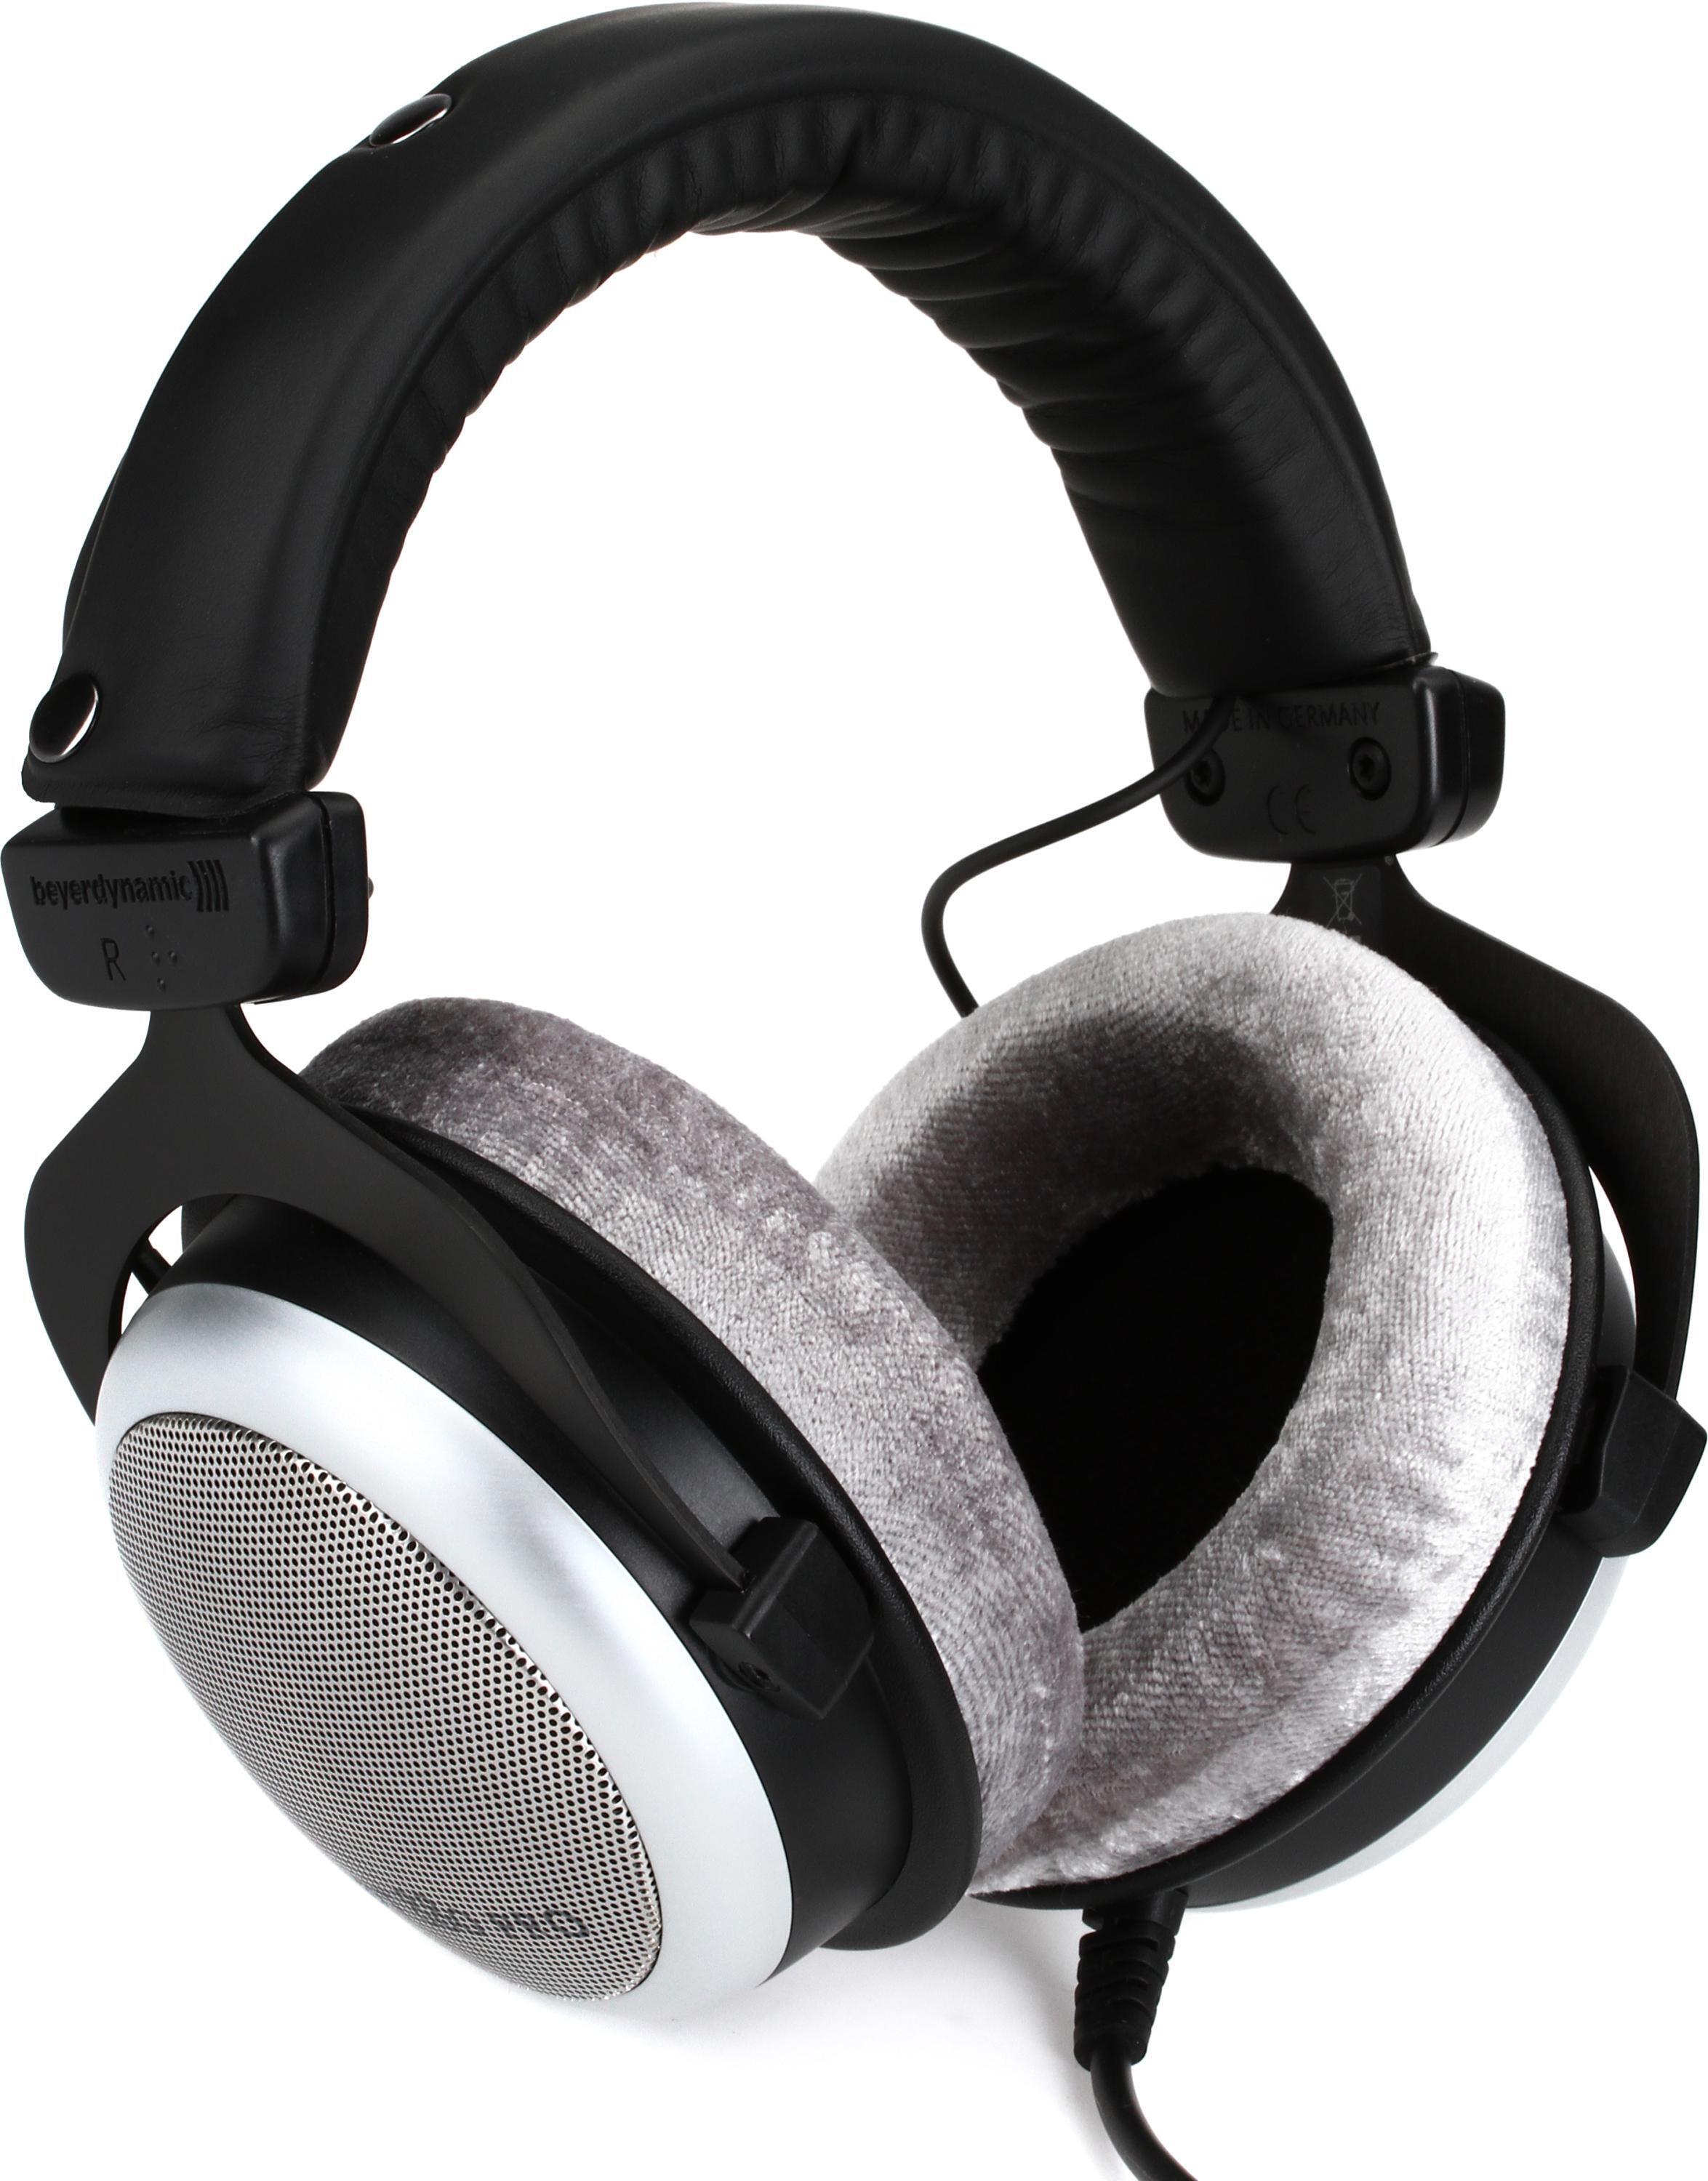 Beyerdynamic DT 880 Pro 250-ohm Semi-open Reference Studio Headphones